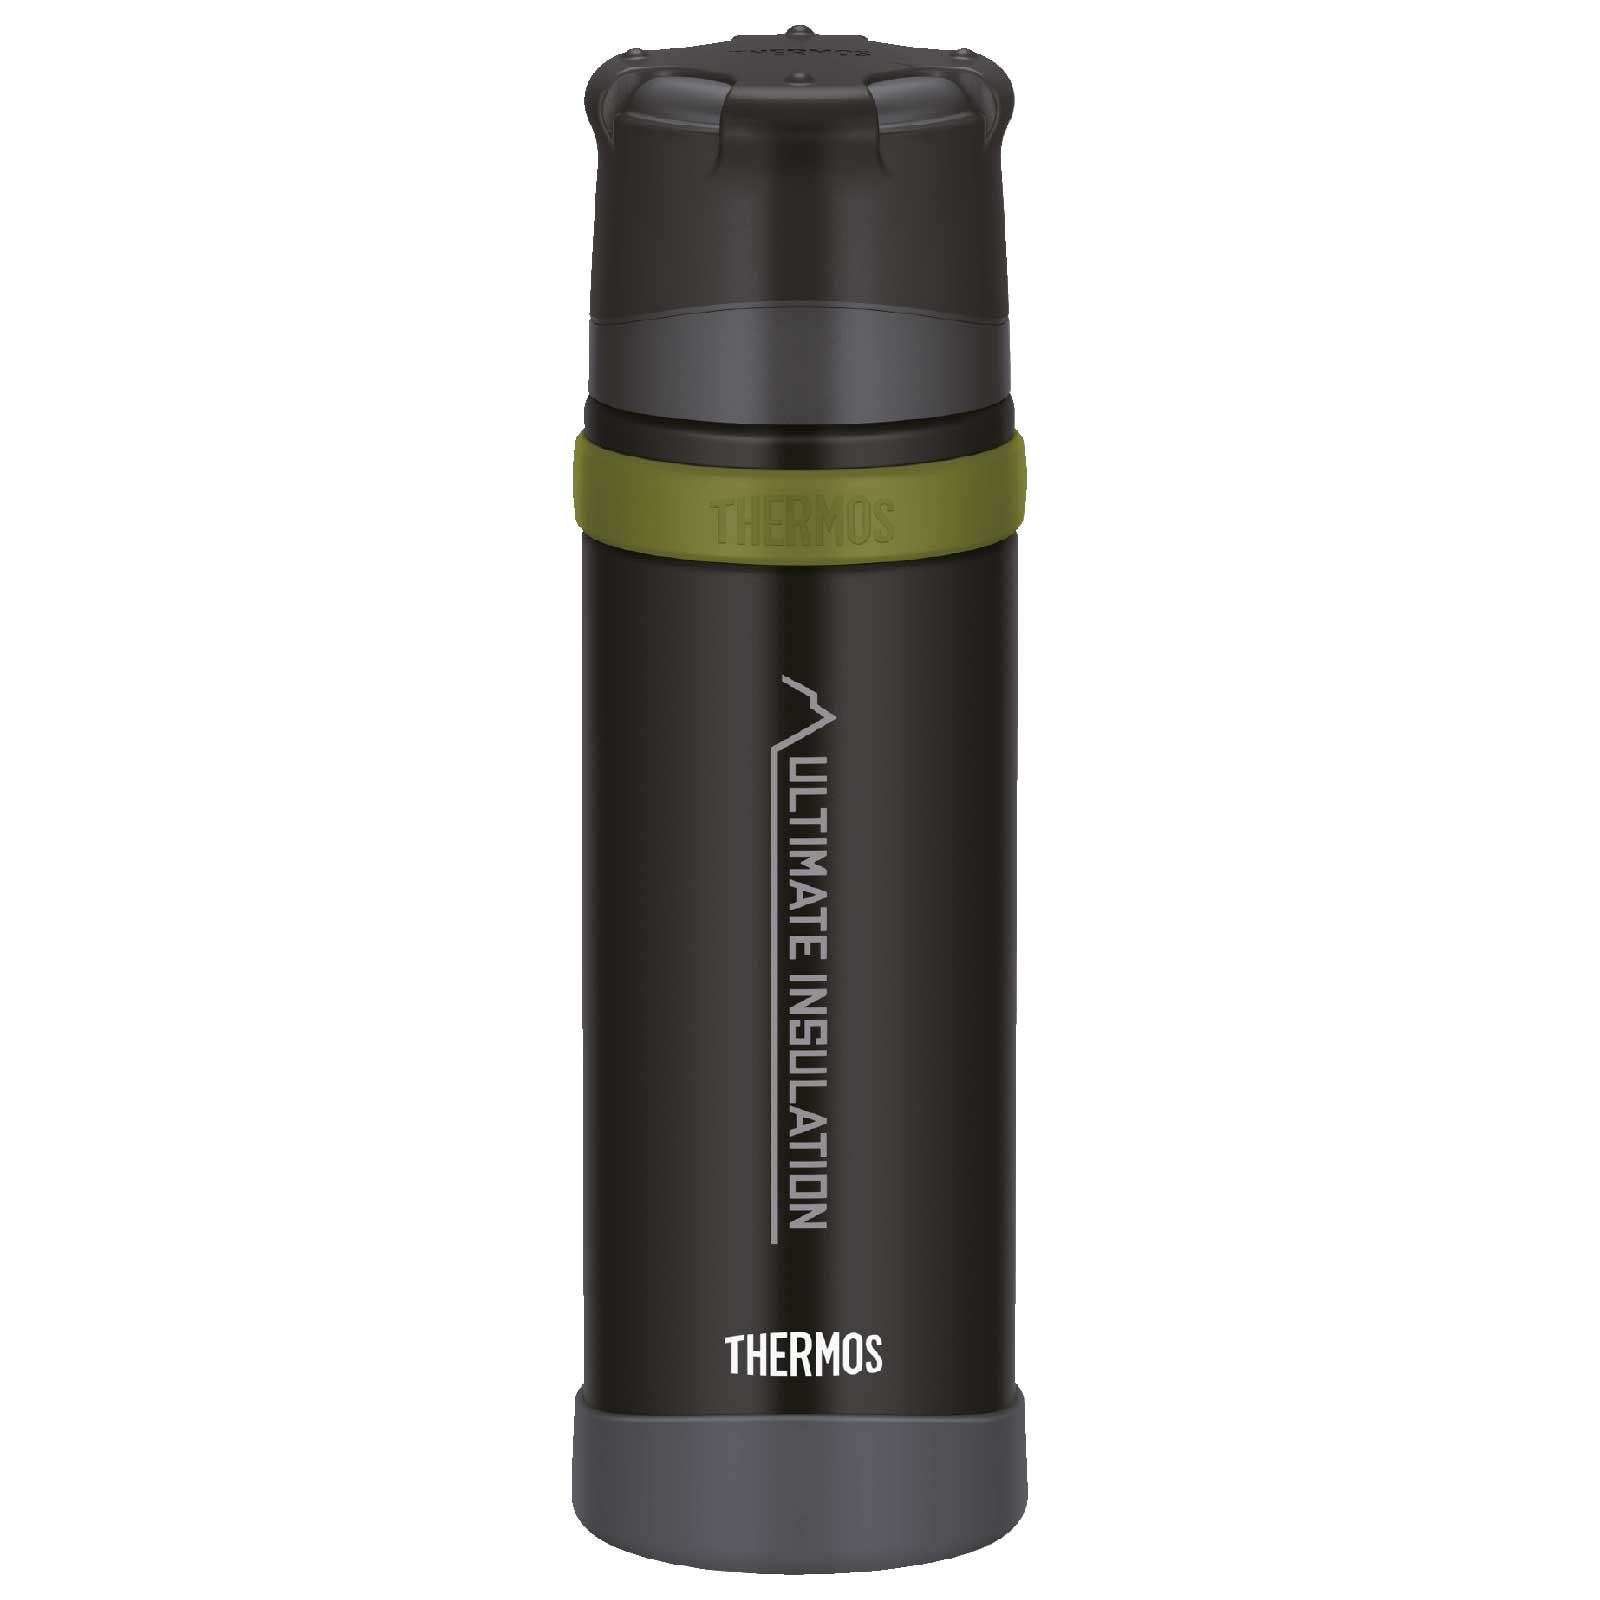 Productfoto van THERMOS® Mountain Beverage Bottle 0.5L - charcoal black mat